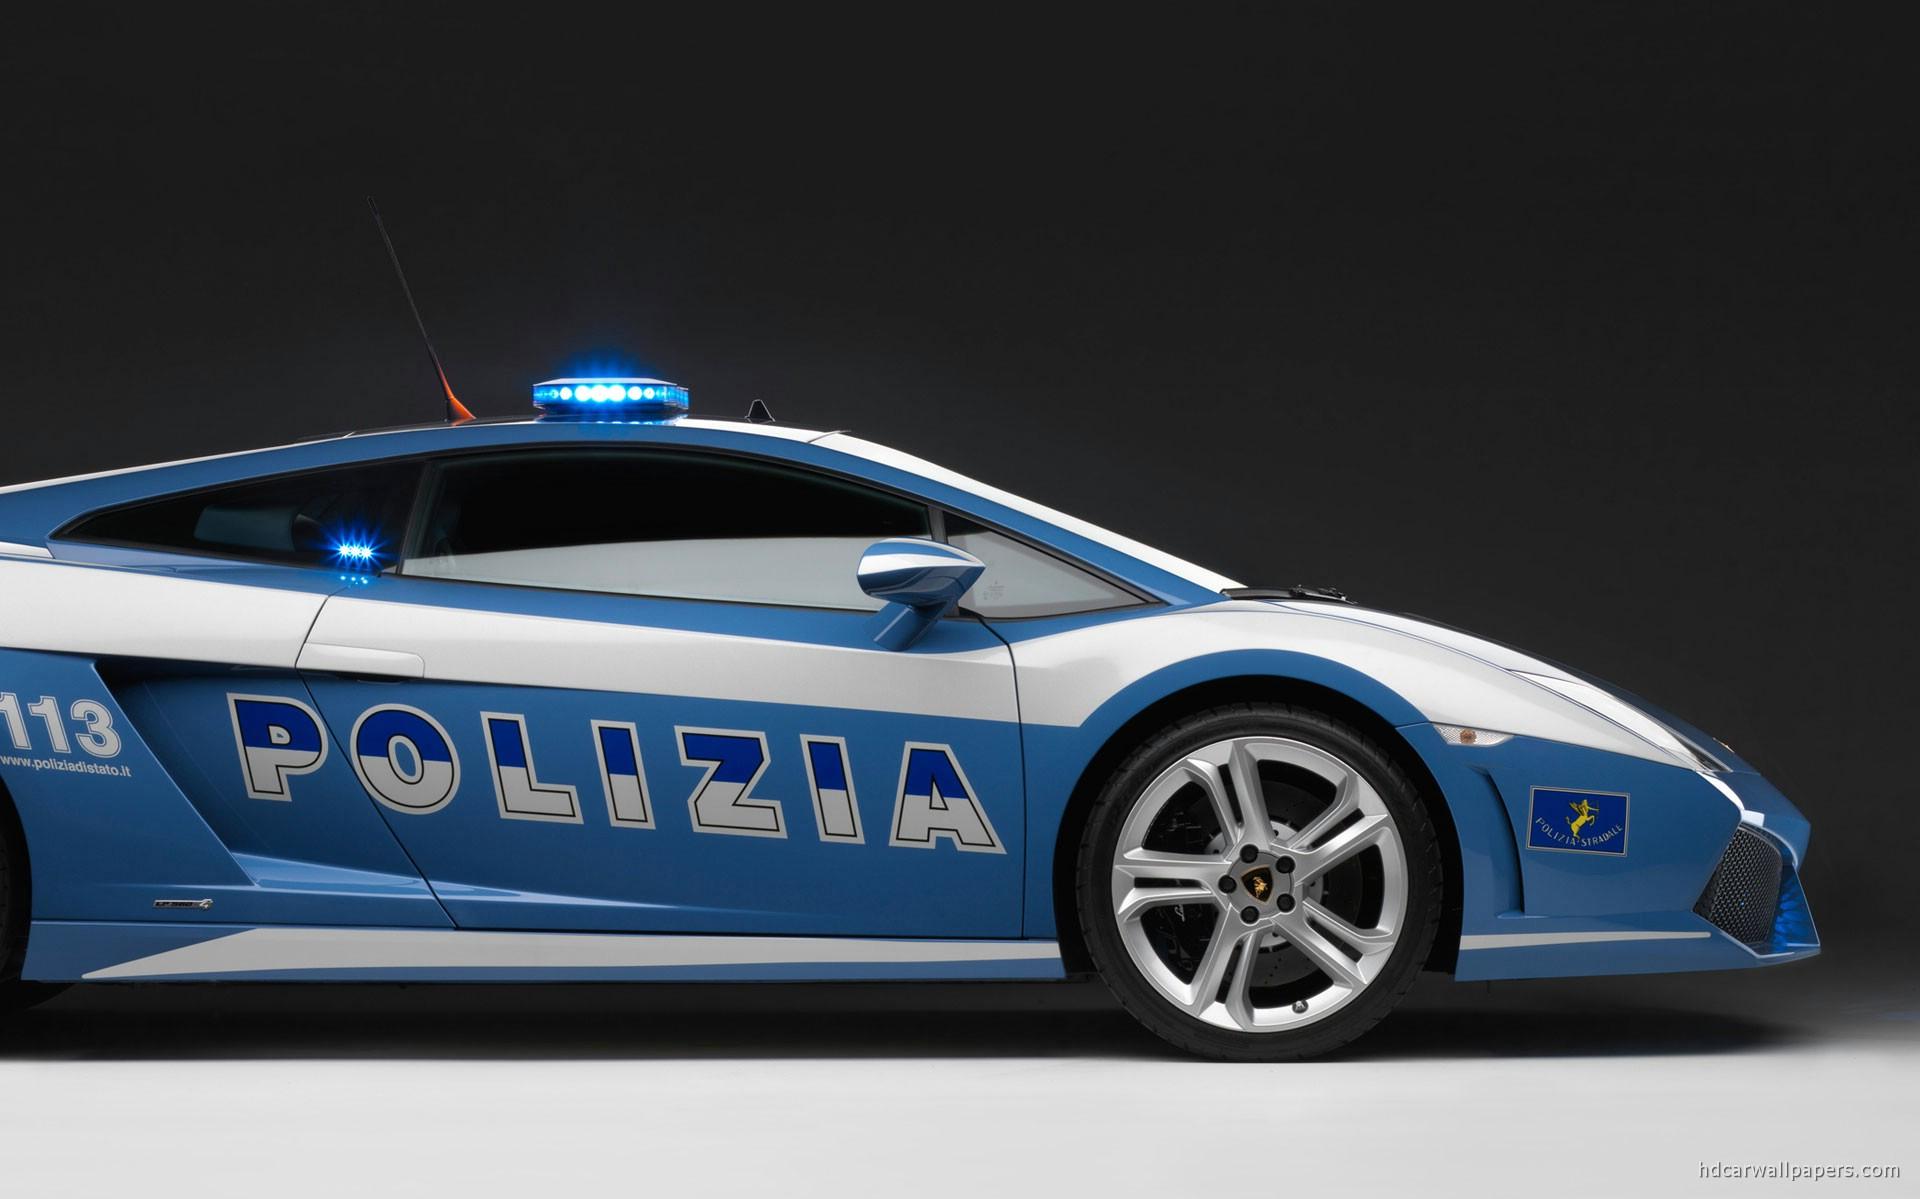  Lamborghini Police Car Wallpaper HD Car Wallpapers